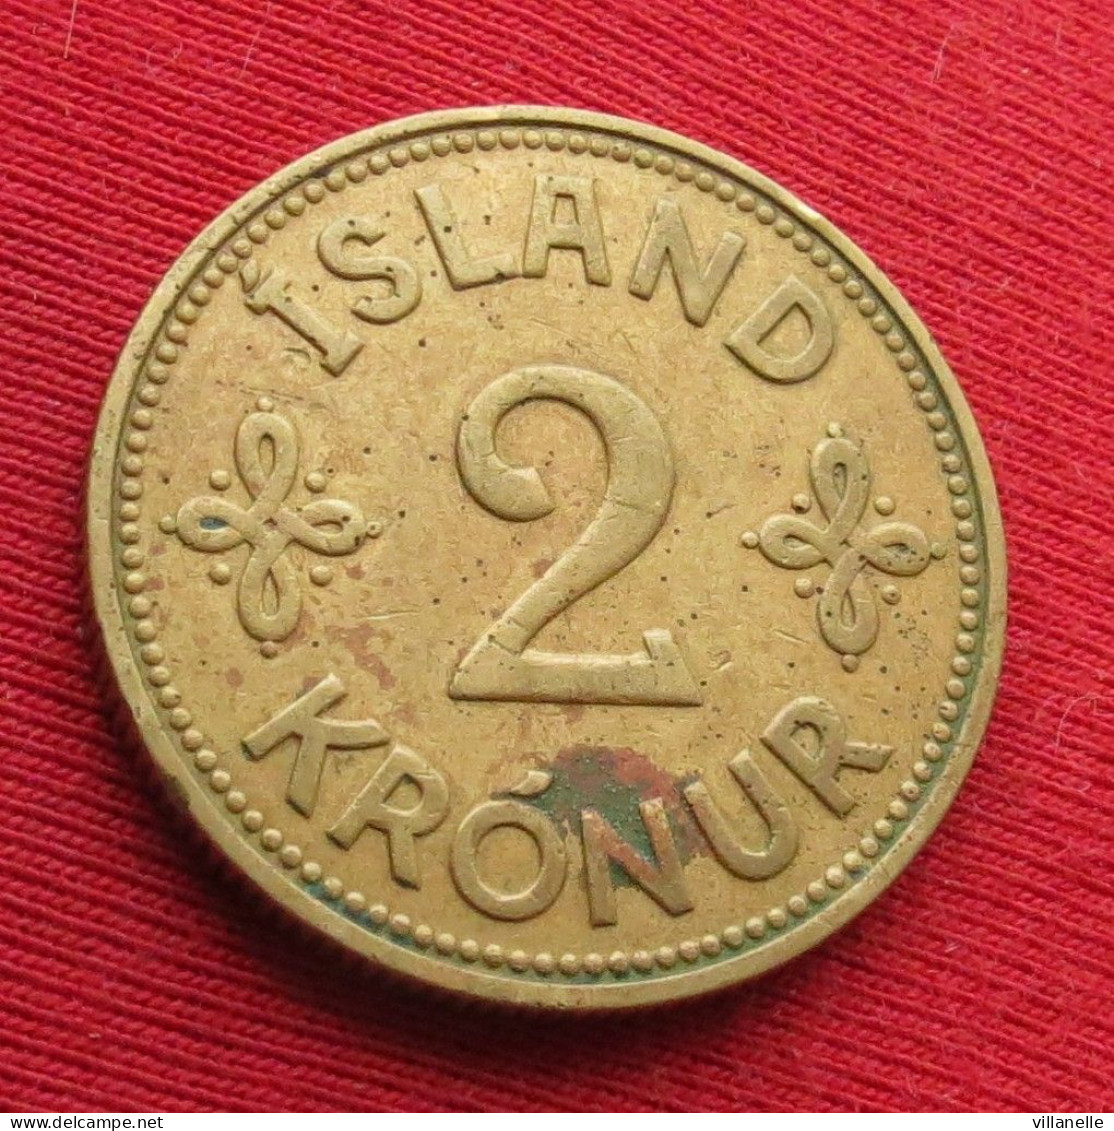 Iceland 2 Kronur 1940 Islandia Islande Island Ijsland W ºº - Iceland